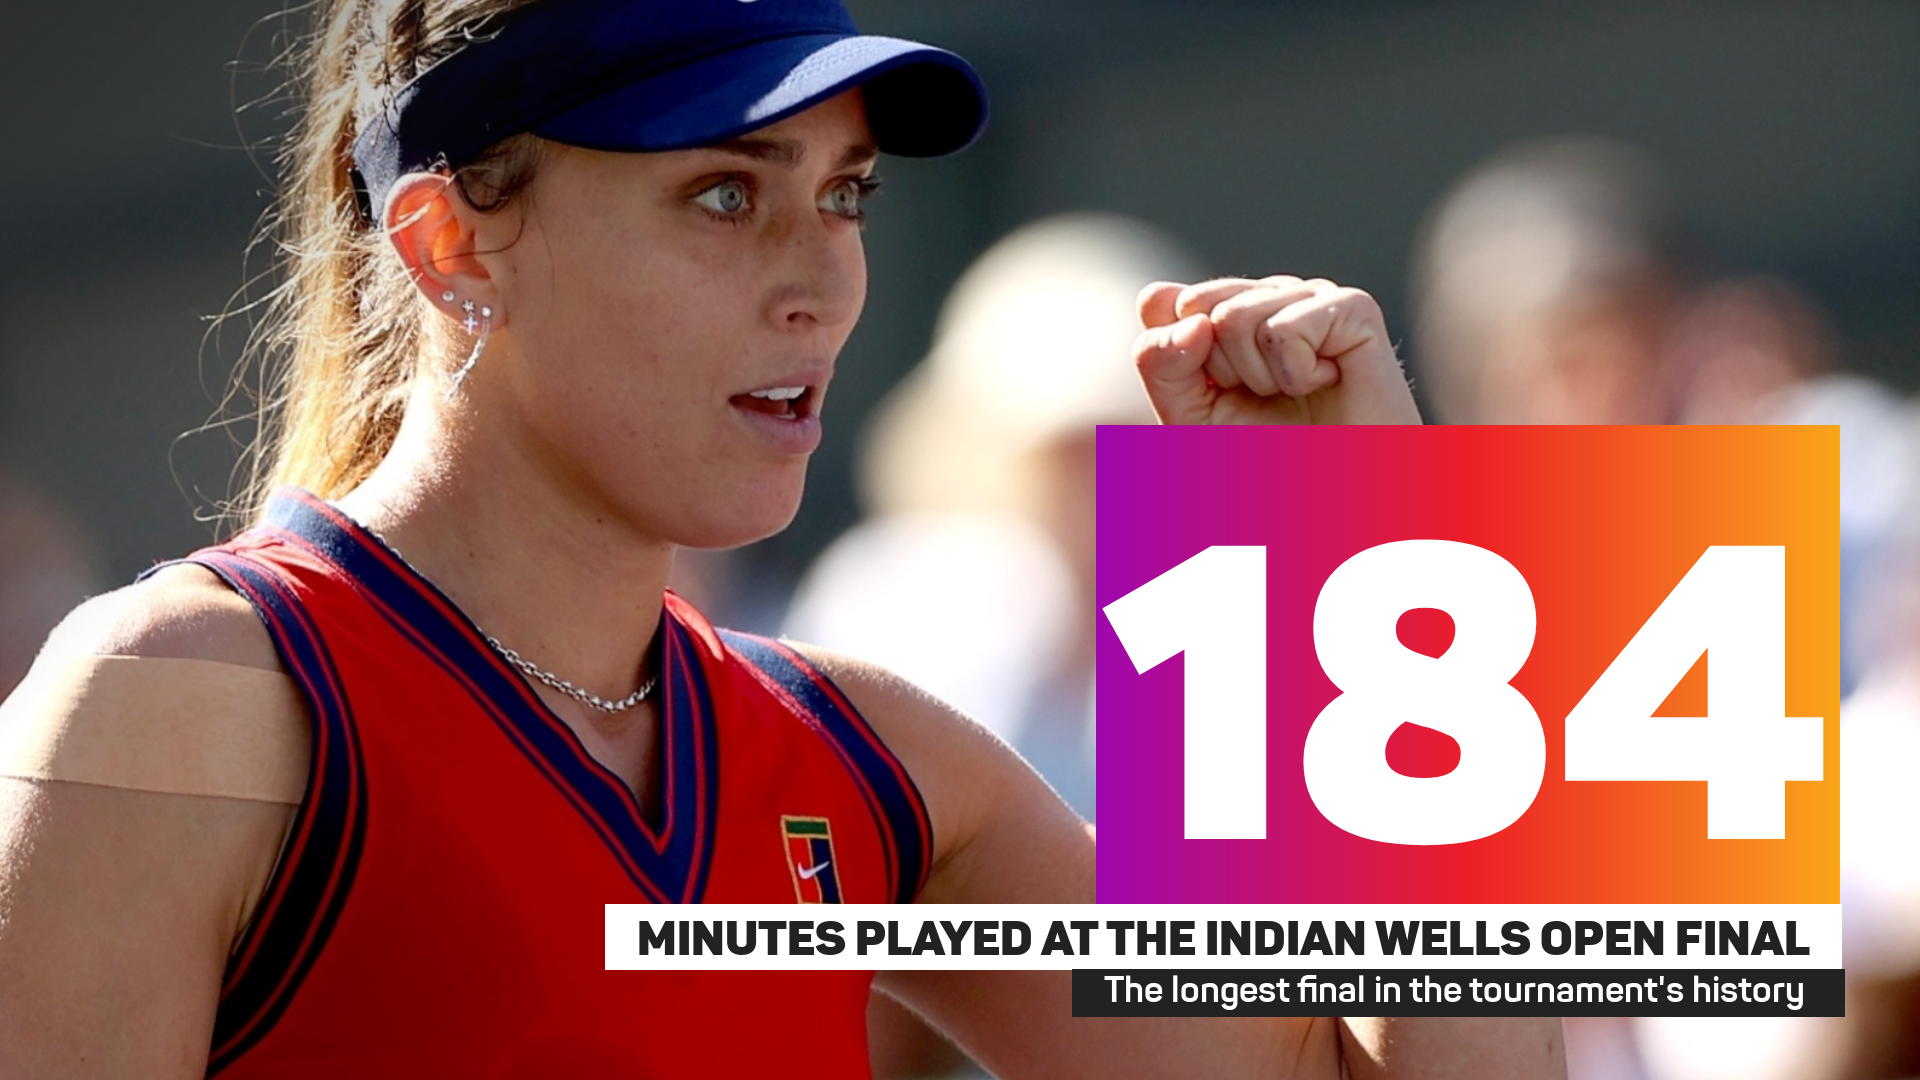 Indian Wells Open longest final